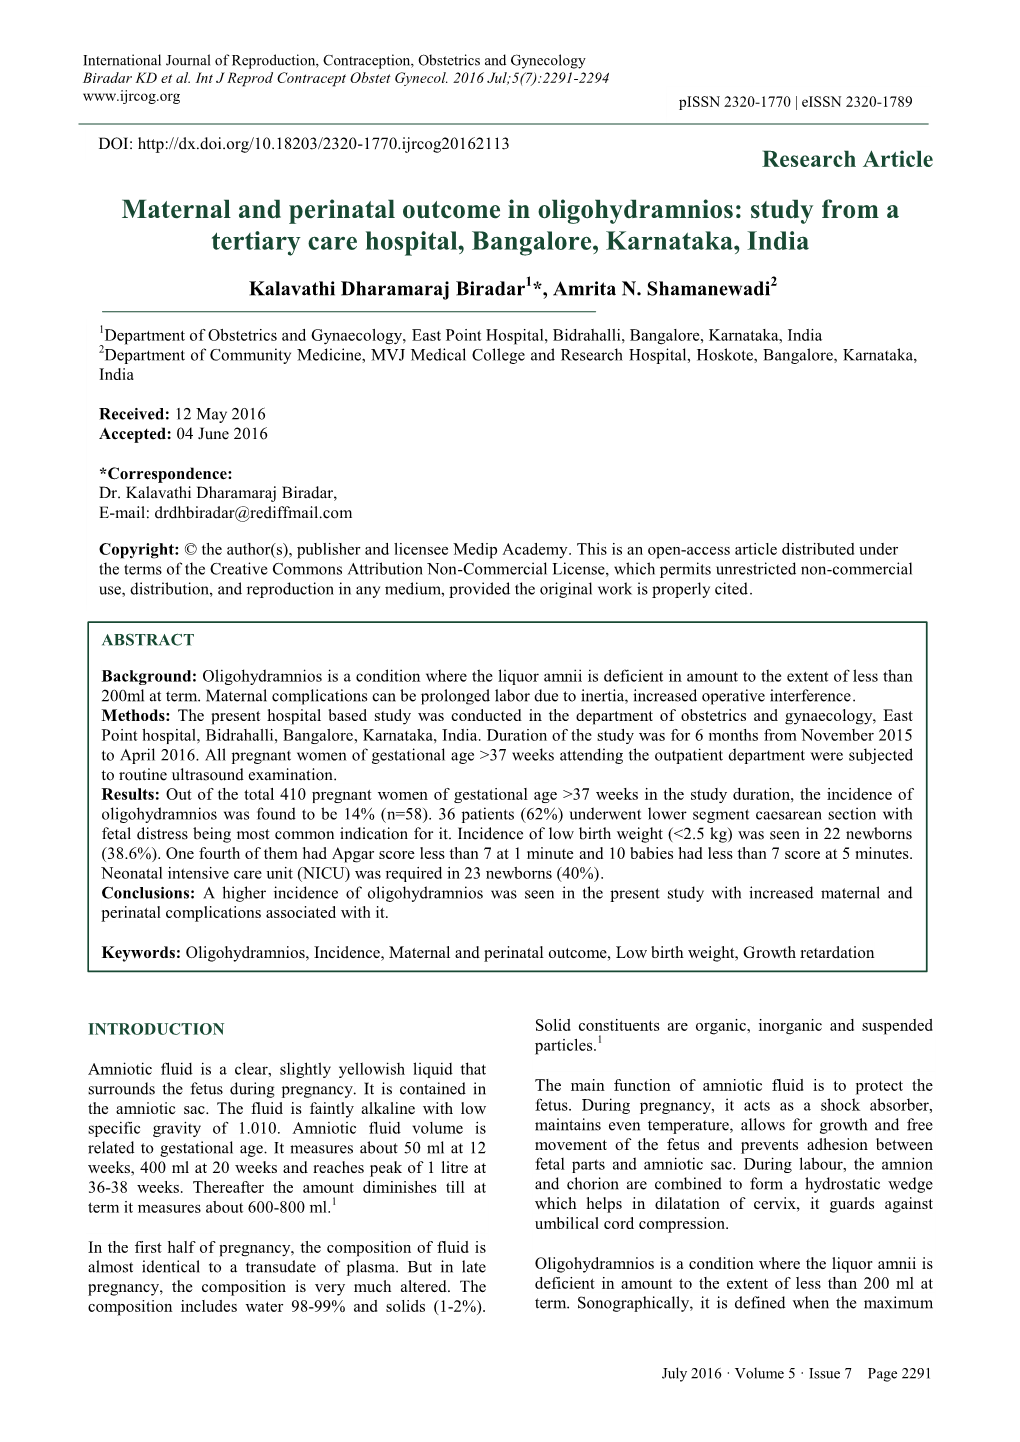 Maternal and Perinatal Outcome in Oligohydramnios: Study from a Tertiary Care Hospital, Bangalore, Karnataka, India